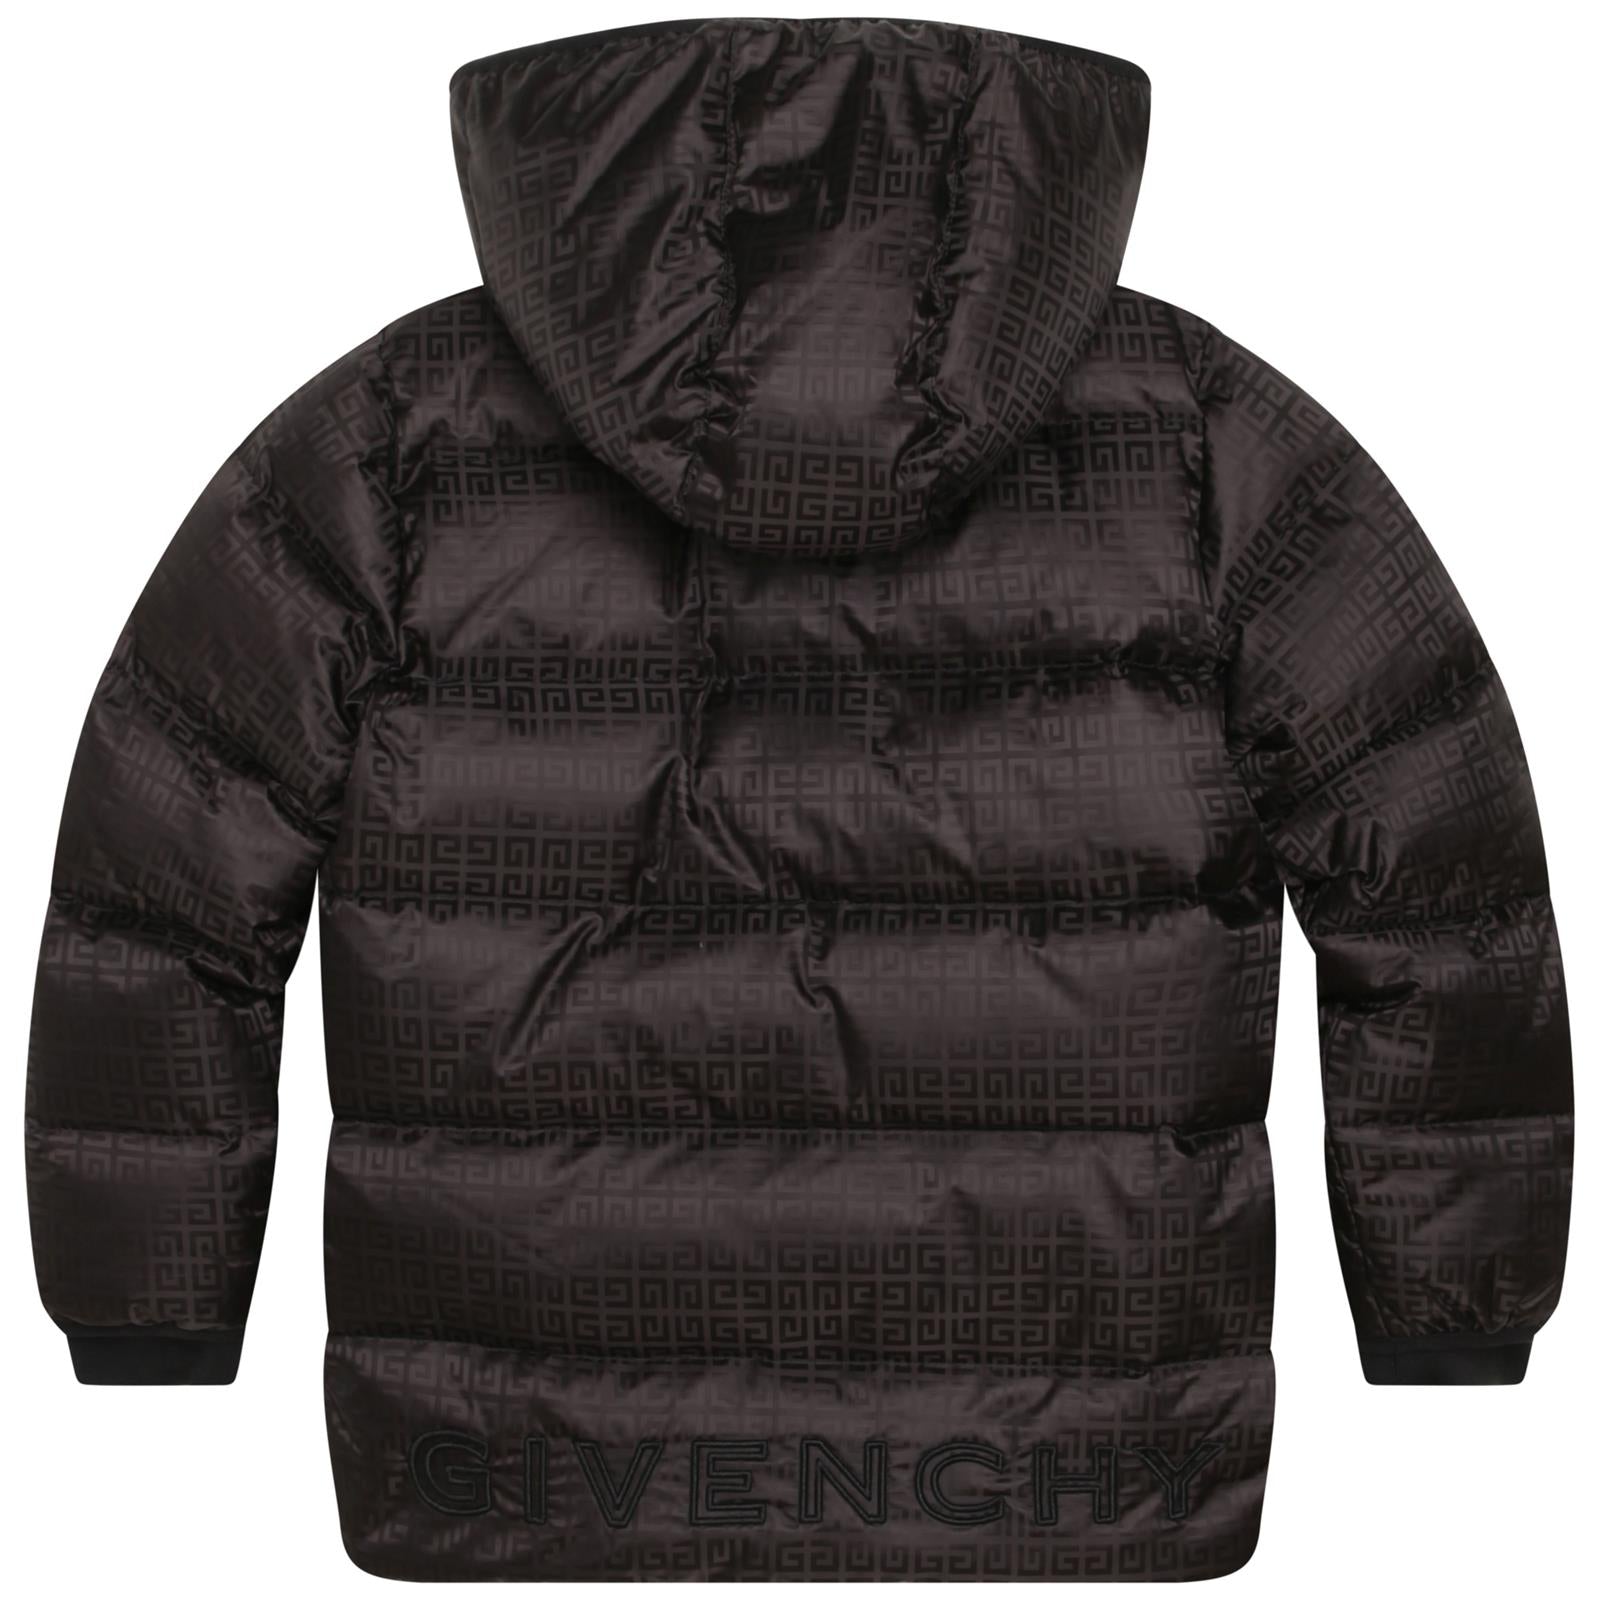 Givenchy Jacquard Black Puffer Jacket